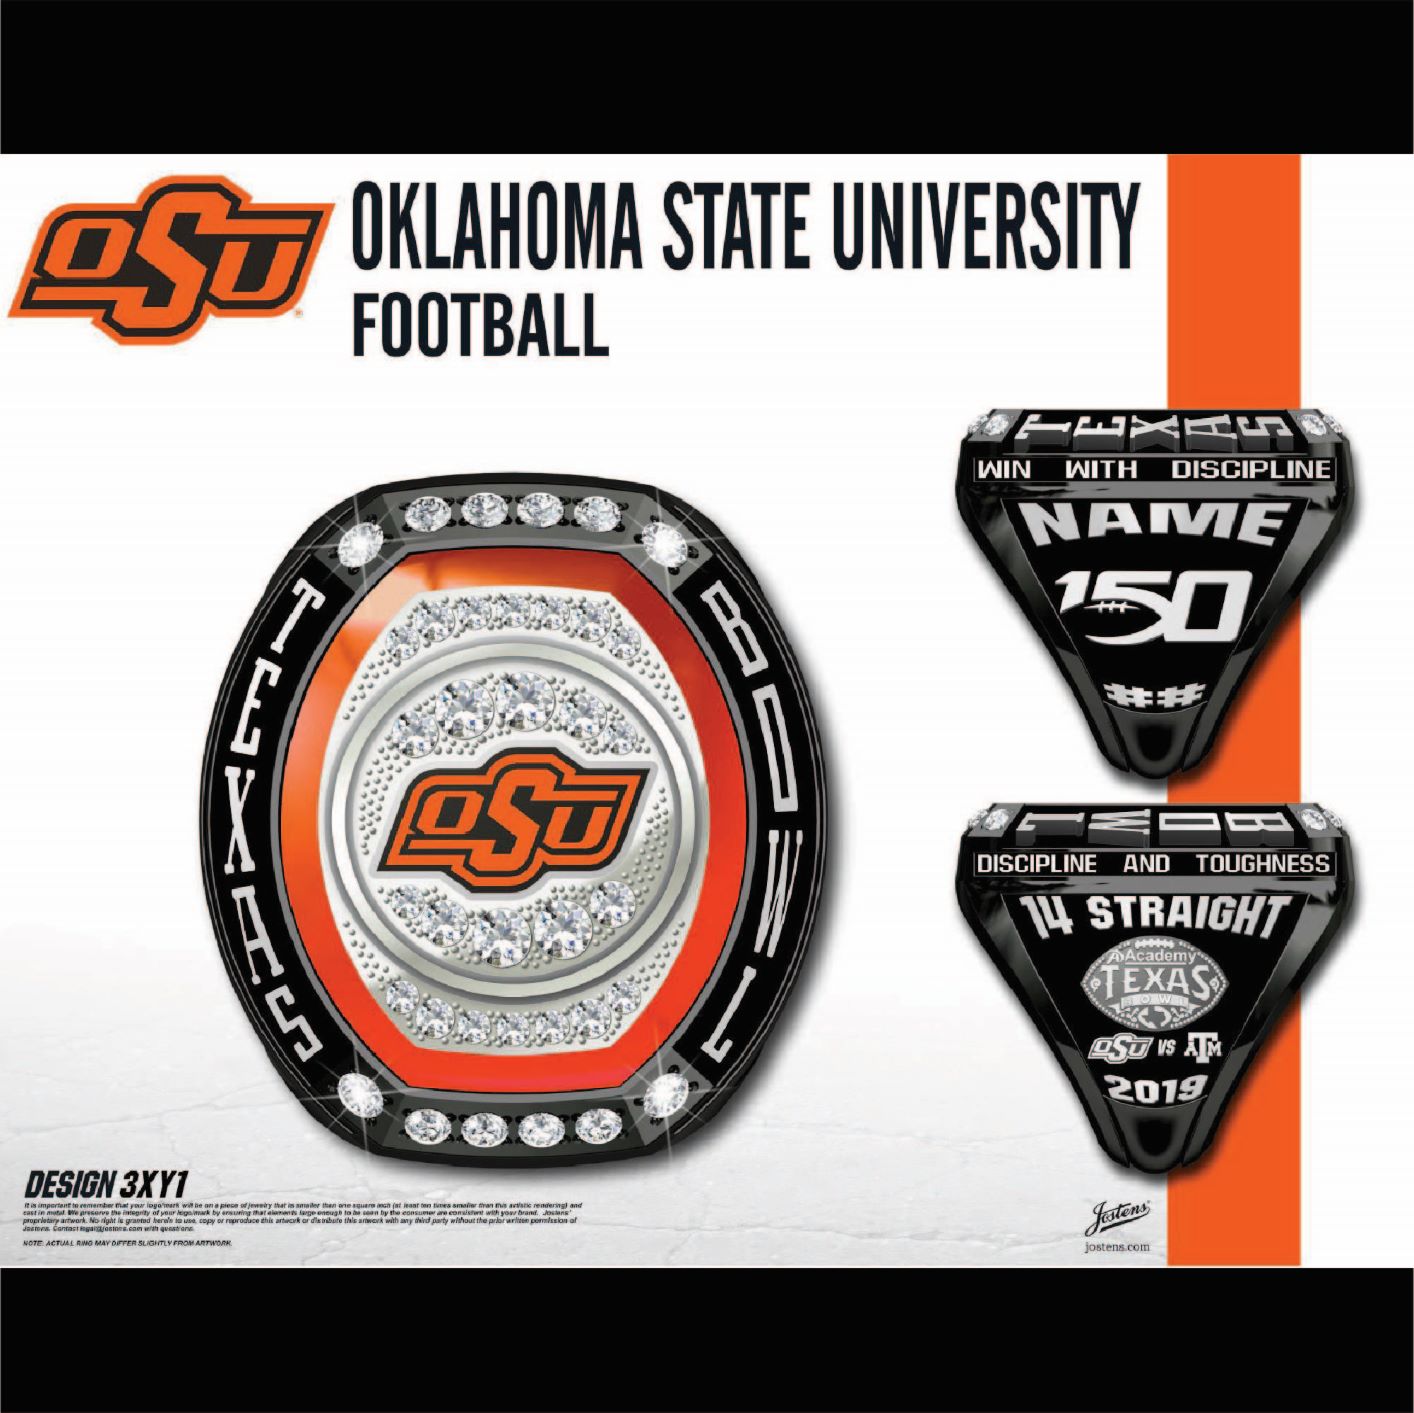 Oklahoma State University Men's Football 2019 Texas Bowl Championship Ring